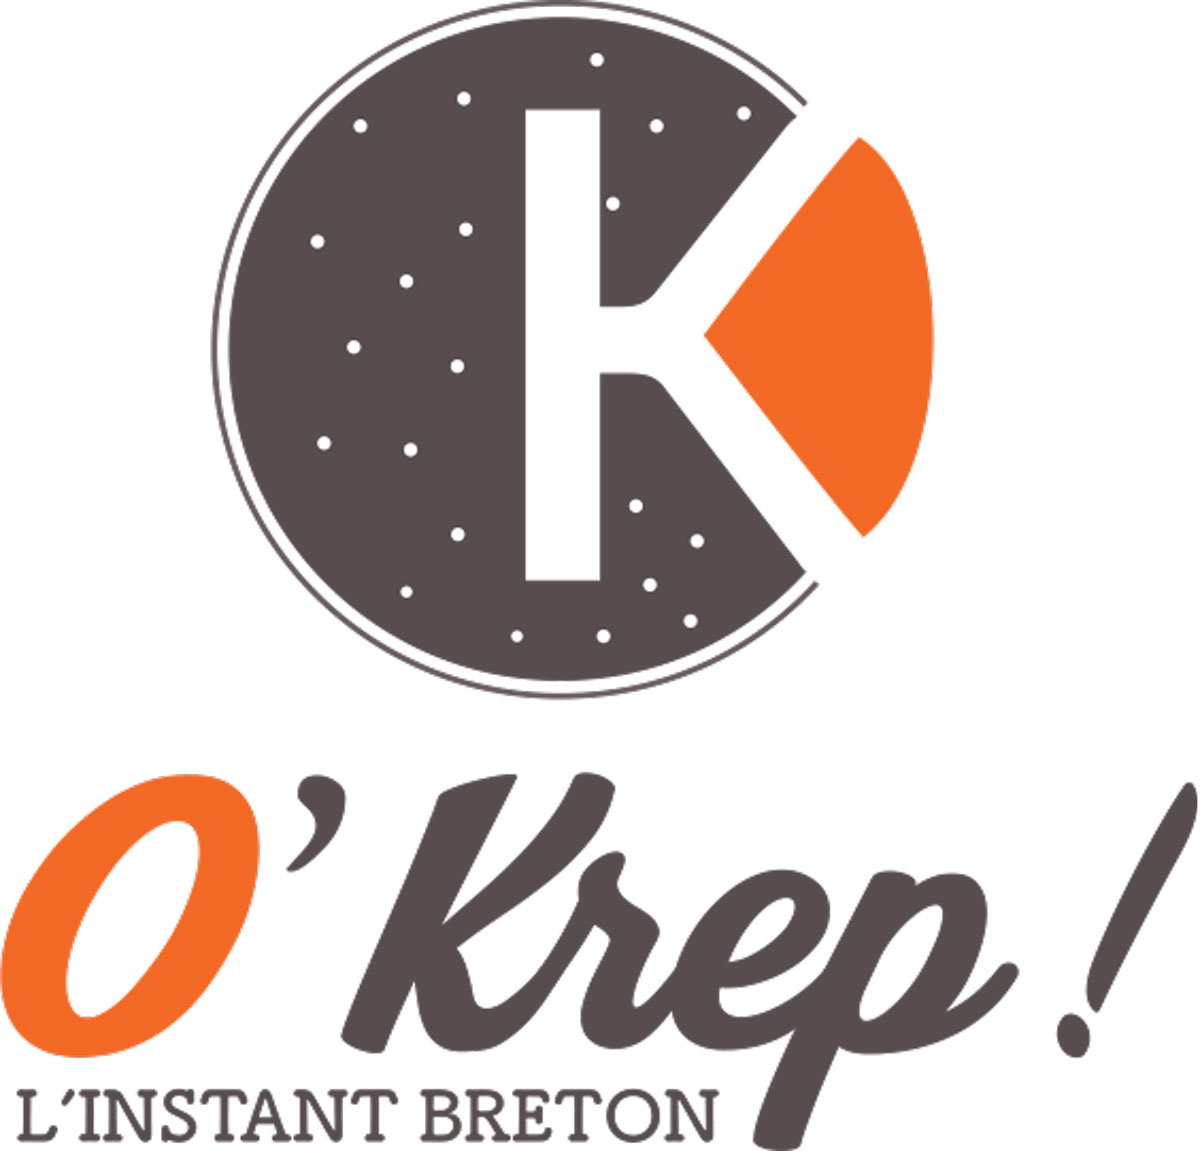 logo OKrep Food Truck